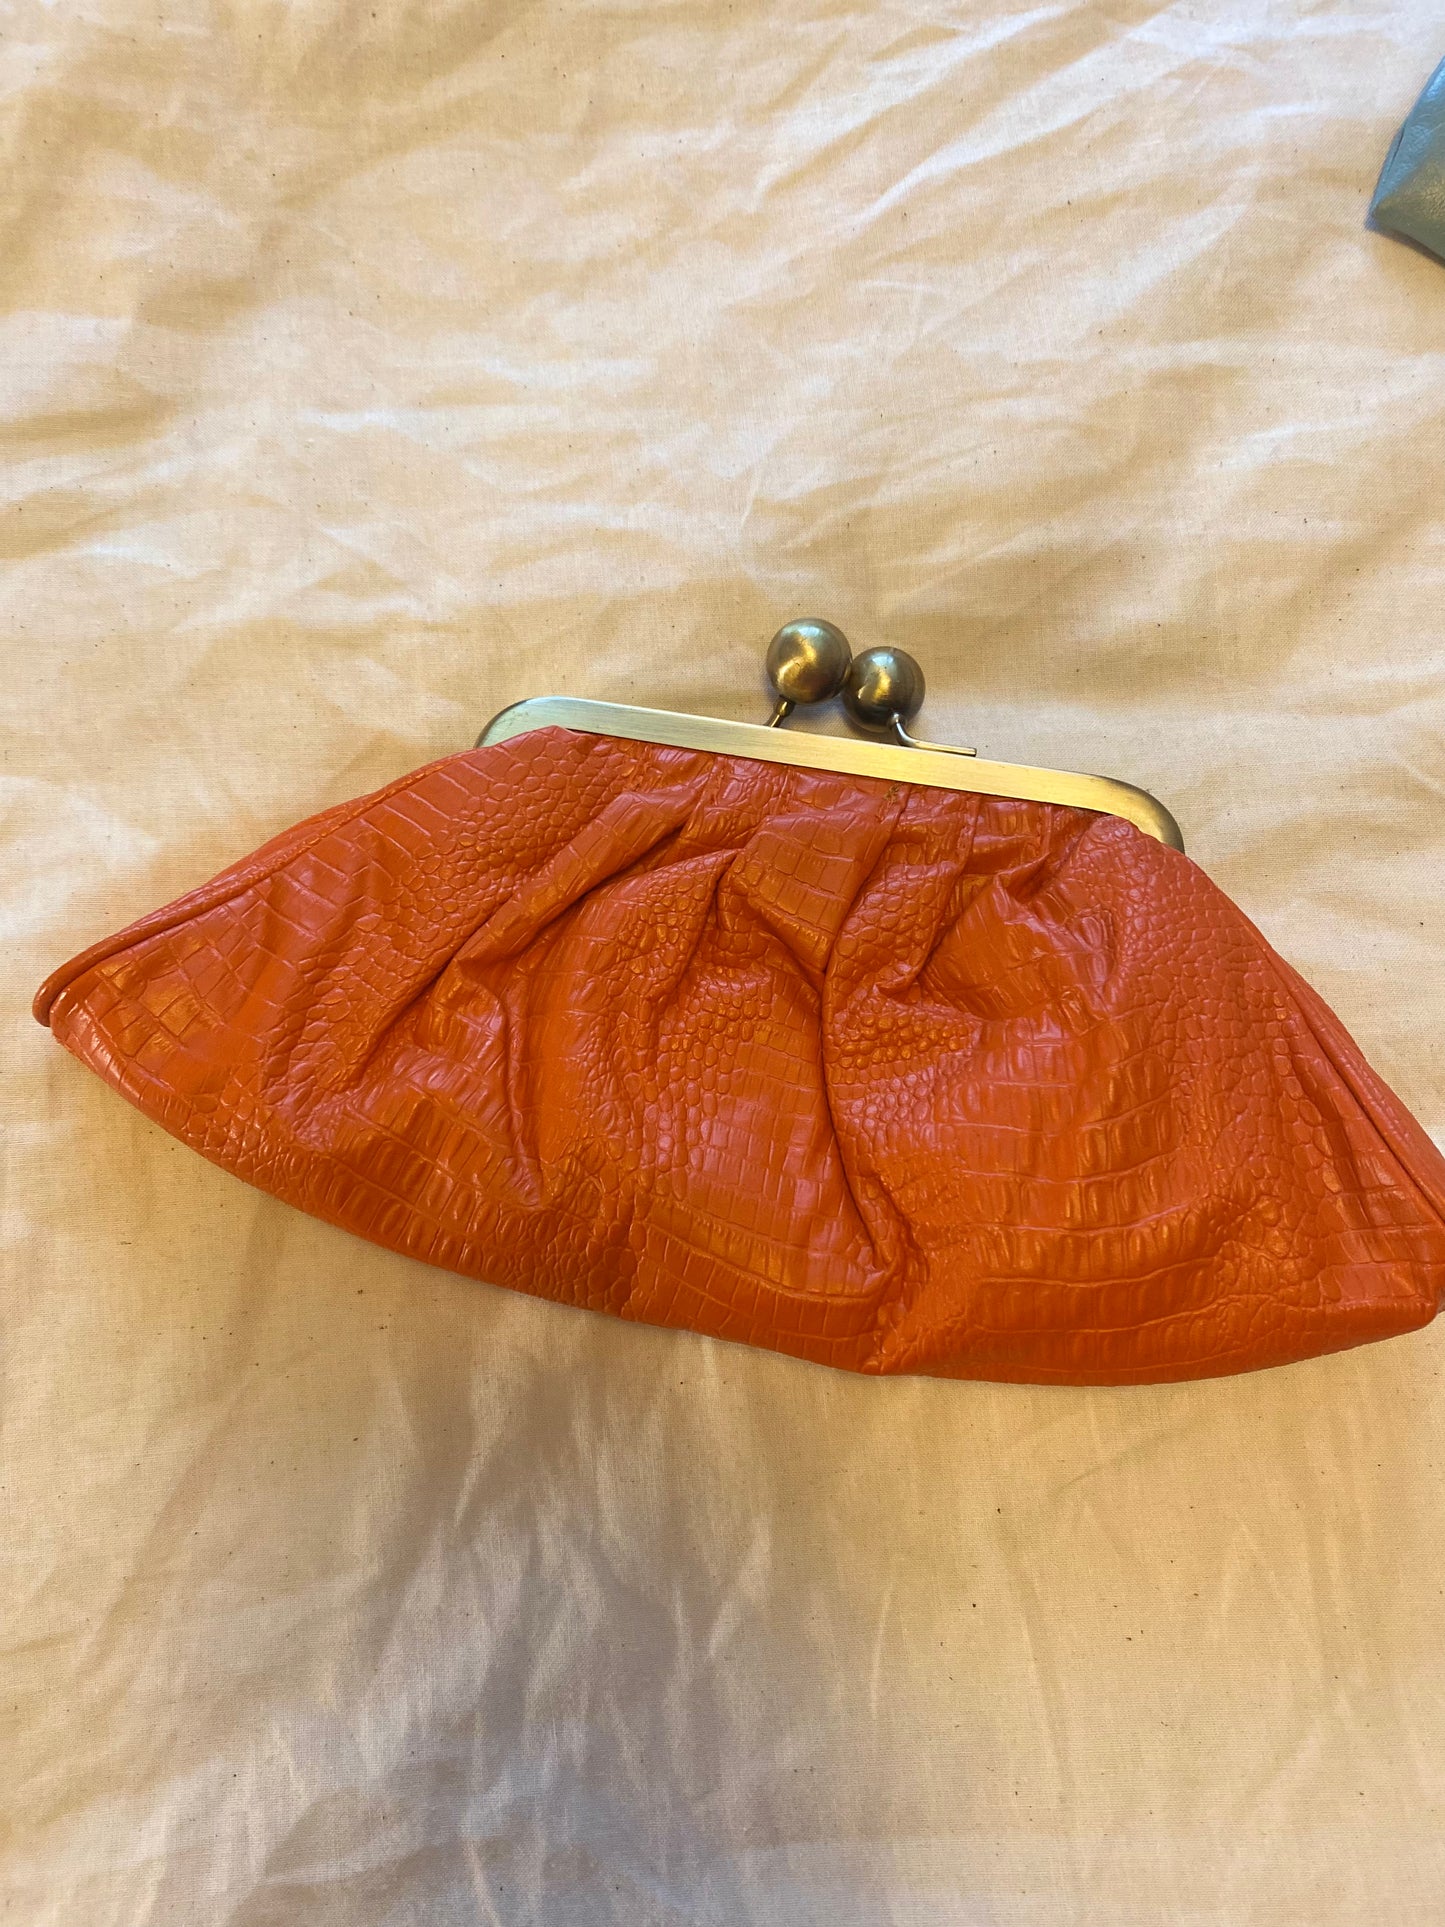 New Bag: Orange Clutch